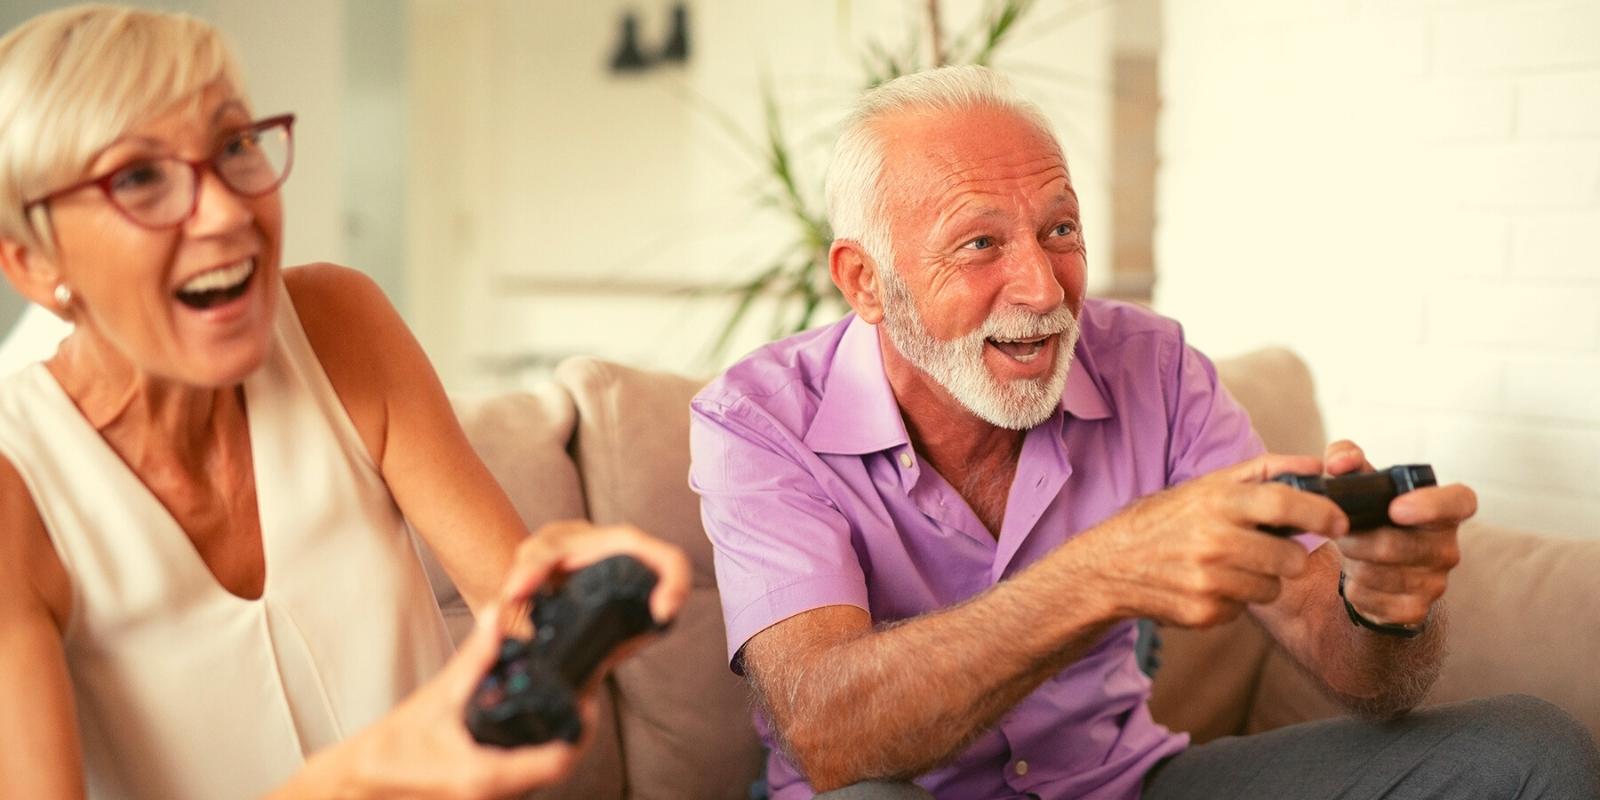 Computer Games for Senior Citizens